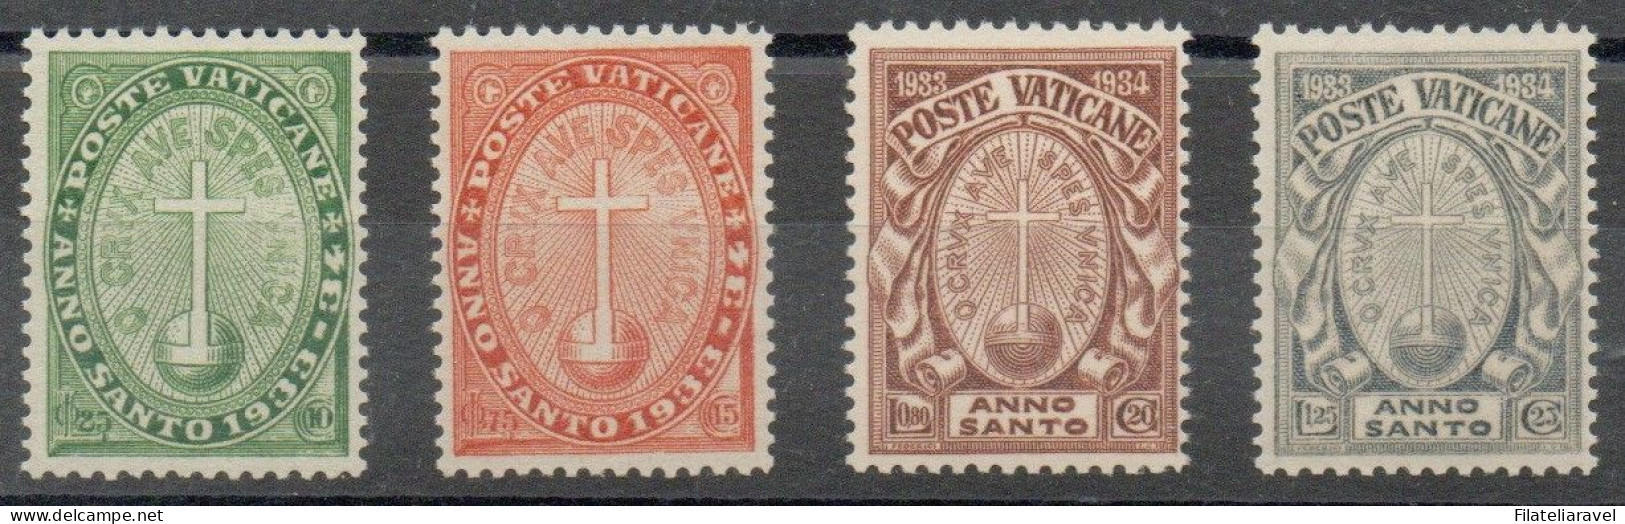 Vaticano - 1933 - "Anno Santo Straordinario", Serie Completa, 4 Valori, Gomma Integra, Catalogo 15/18 - Nuevos